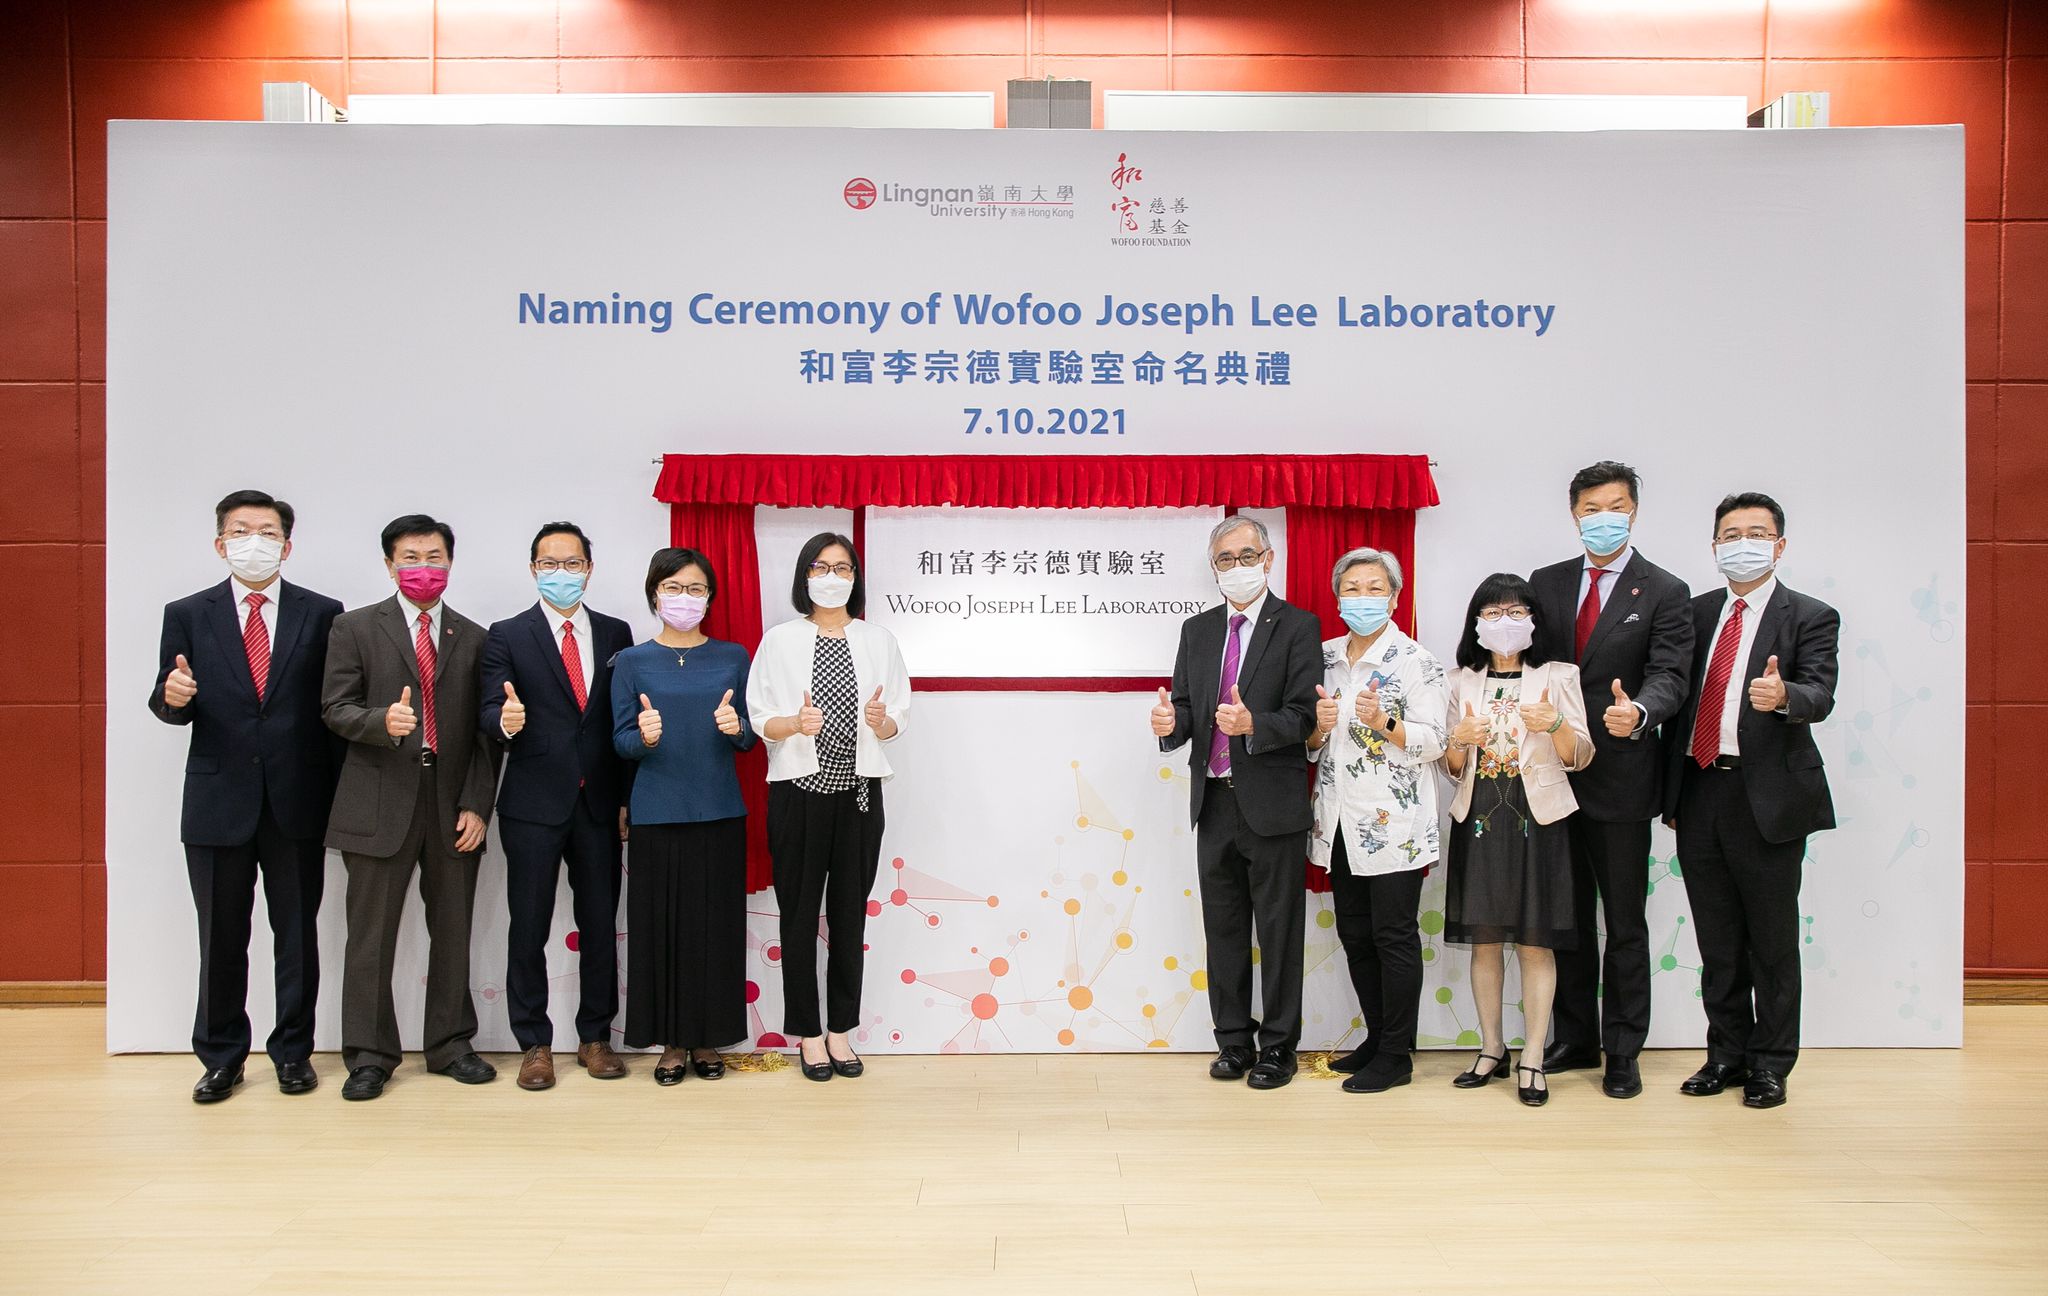 Naming Ceremony of Wofoo Joseph Lee Laboratory